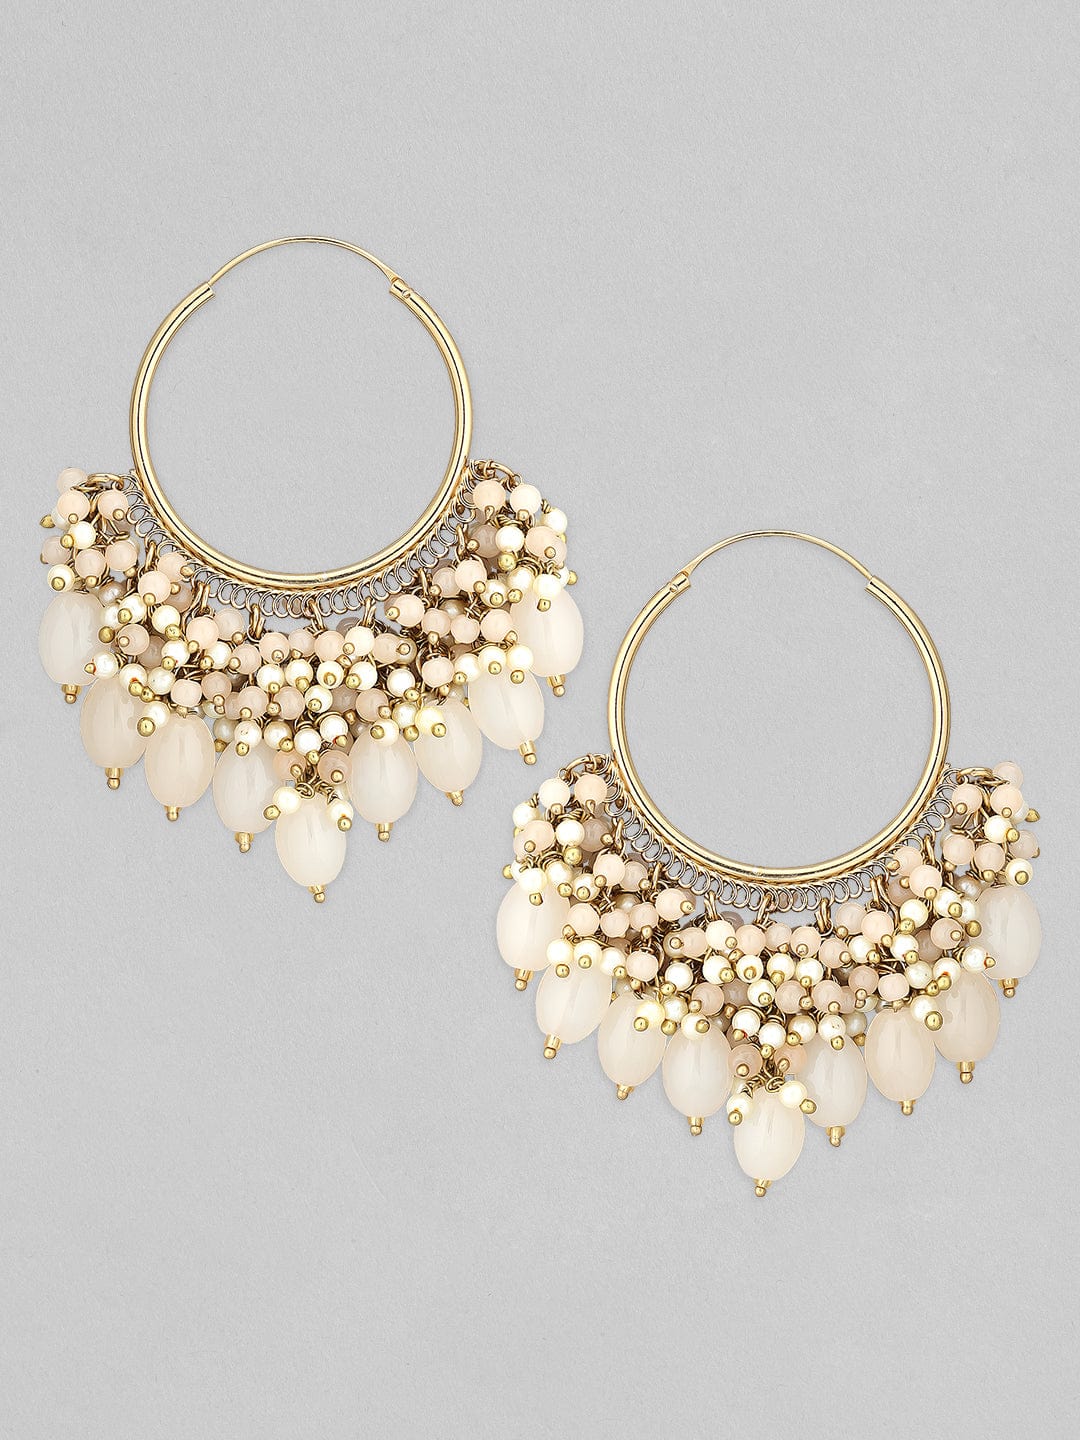 Rubans 22k Gold-Plated Handcrafted Gold Chandbali Earrings Earrings